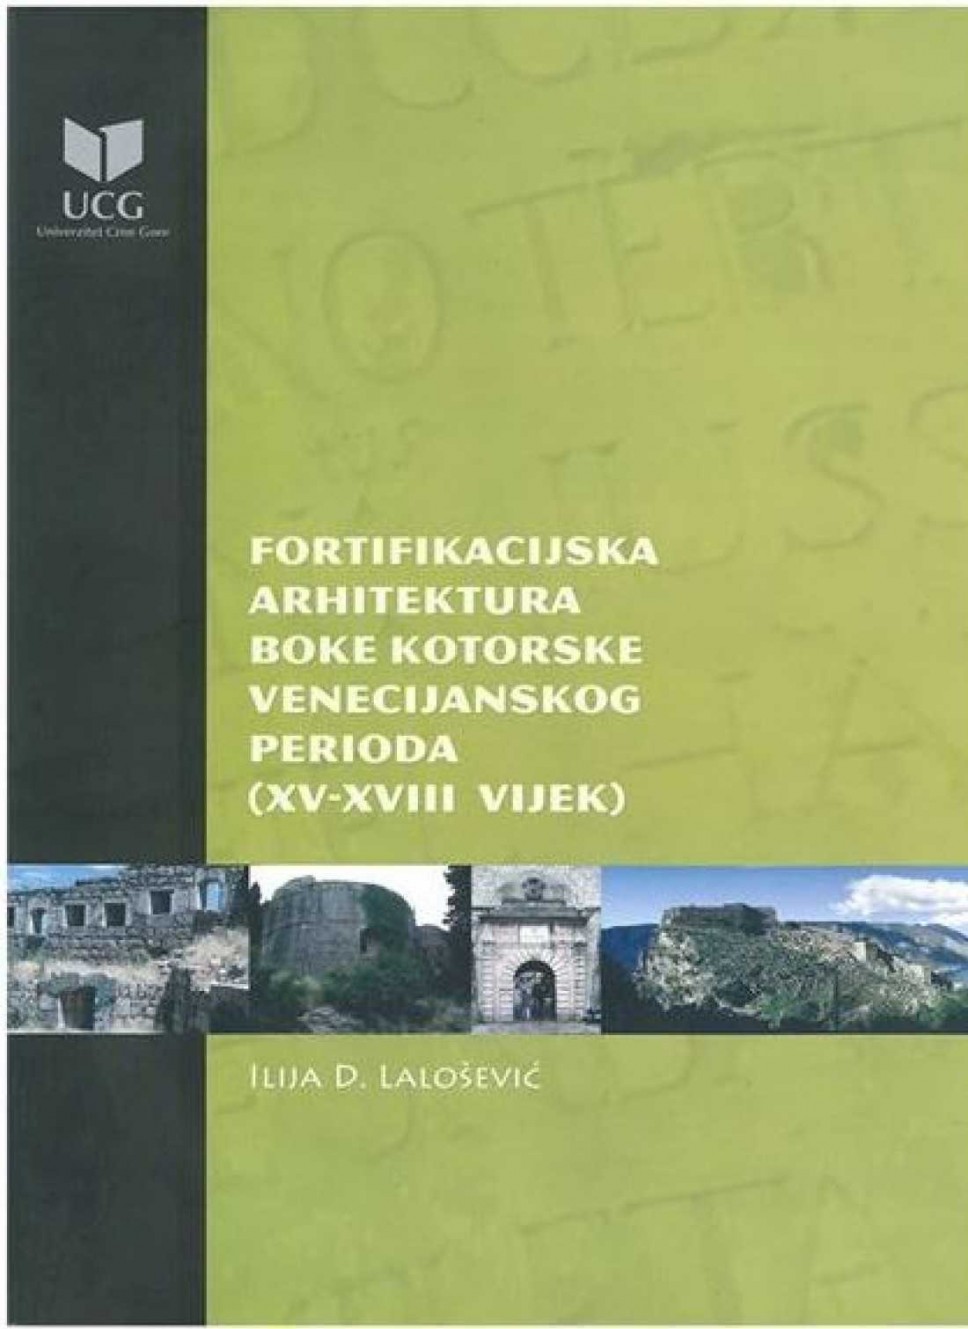 Predstavljena monografija o arhitekturi Boke venecijanskog perioda